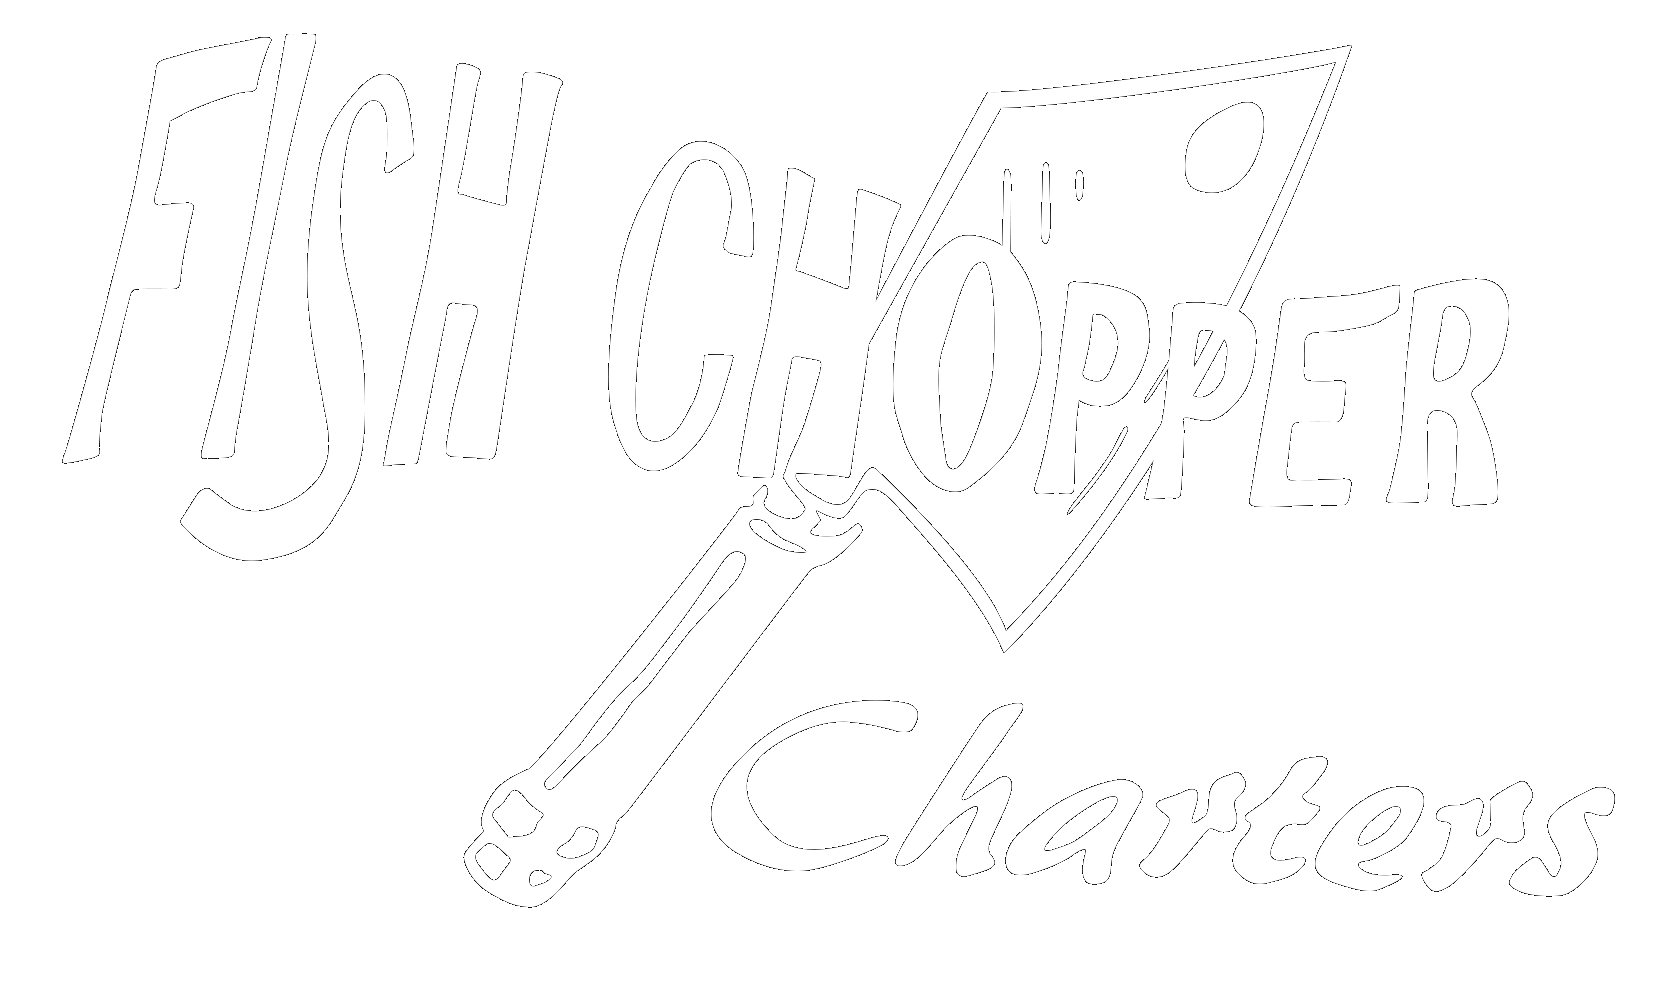 Fishchopper Charters